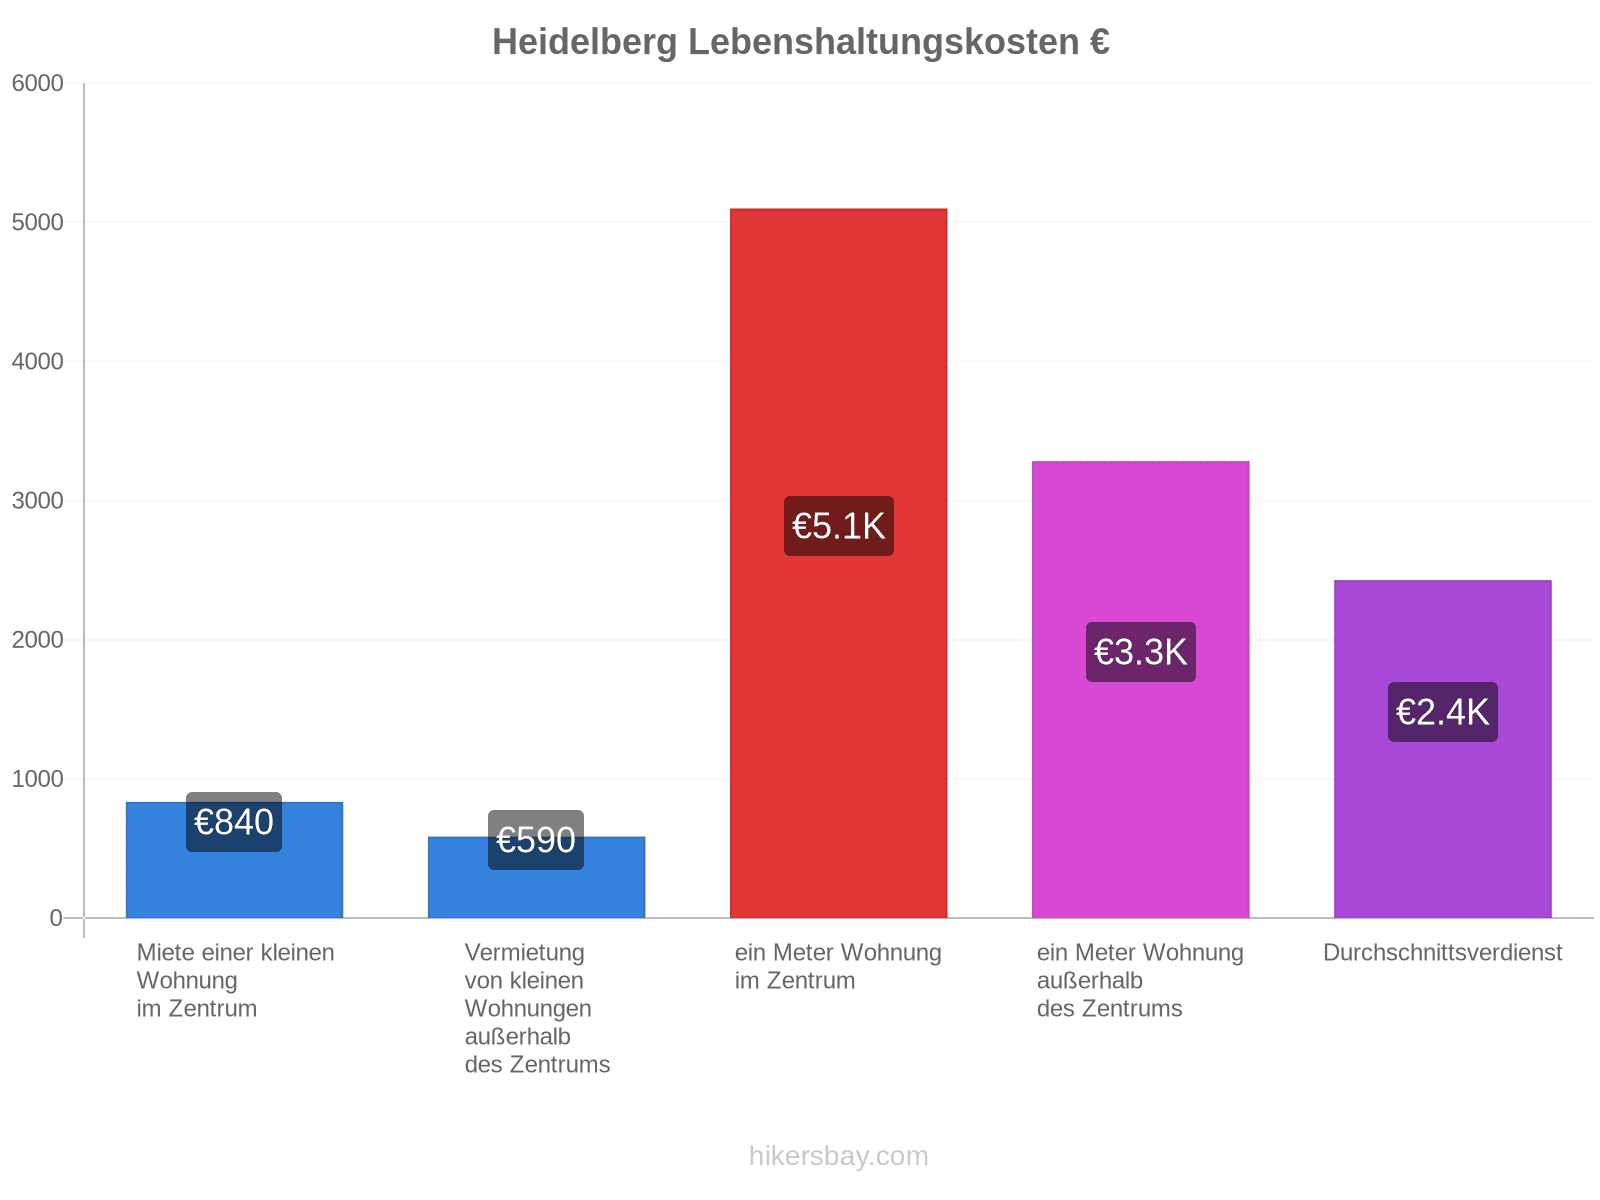 Heidelberg Lebenshaltungskosten hikersbay.com